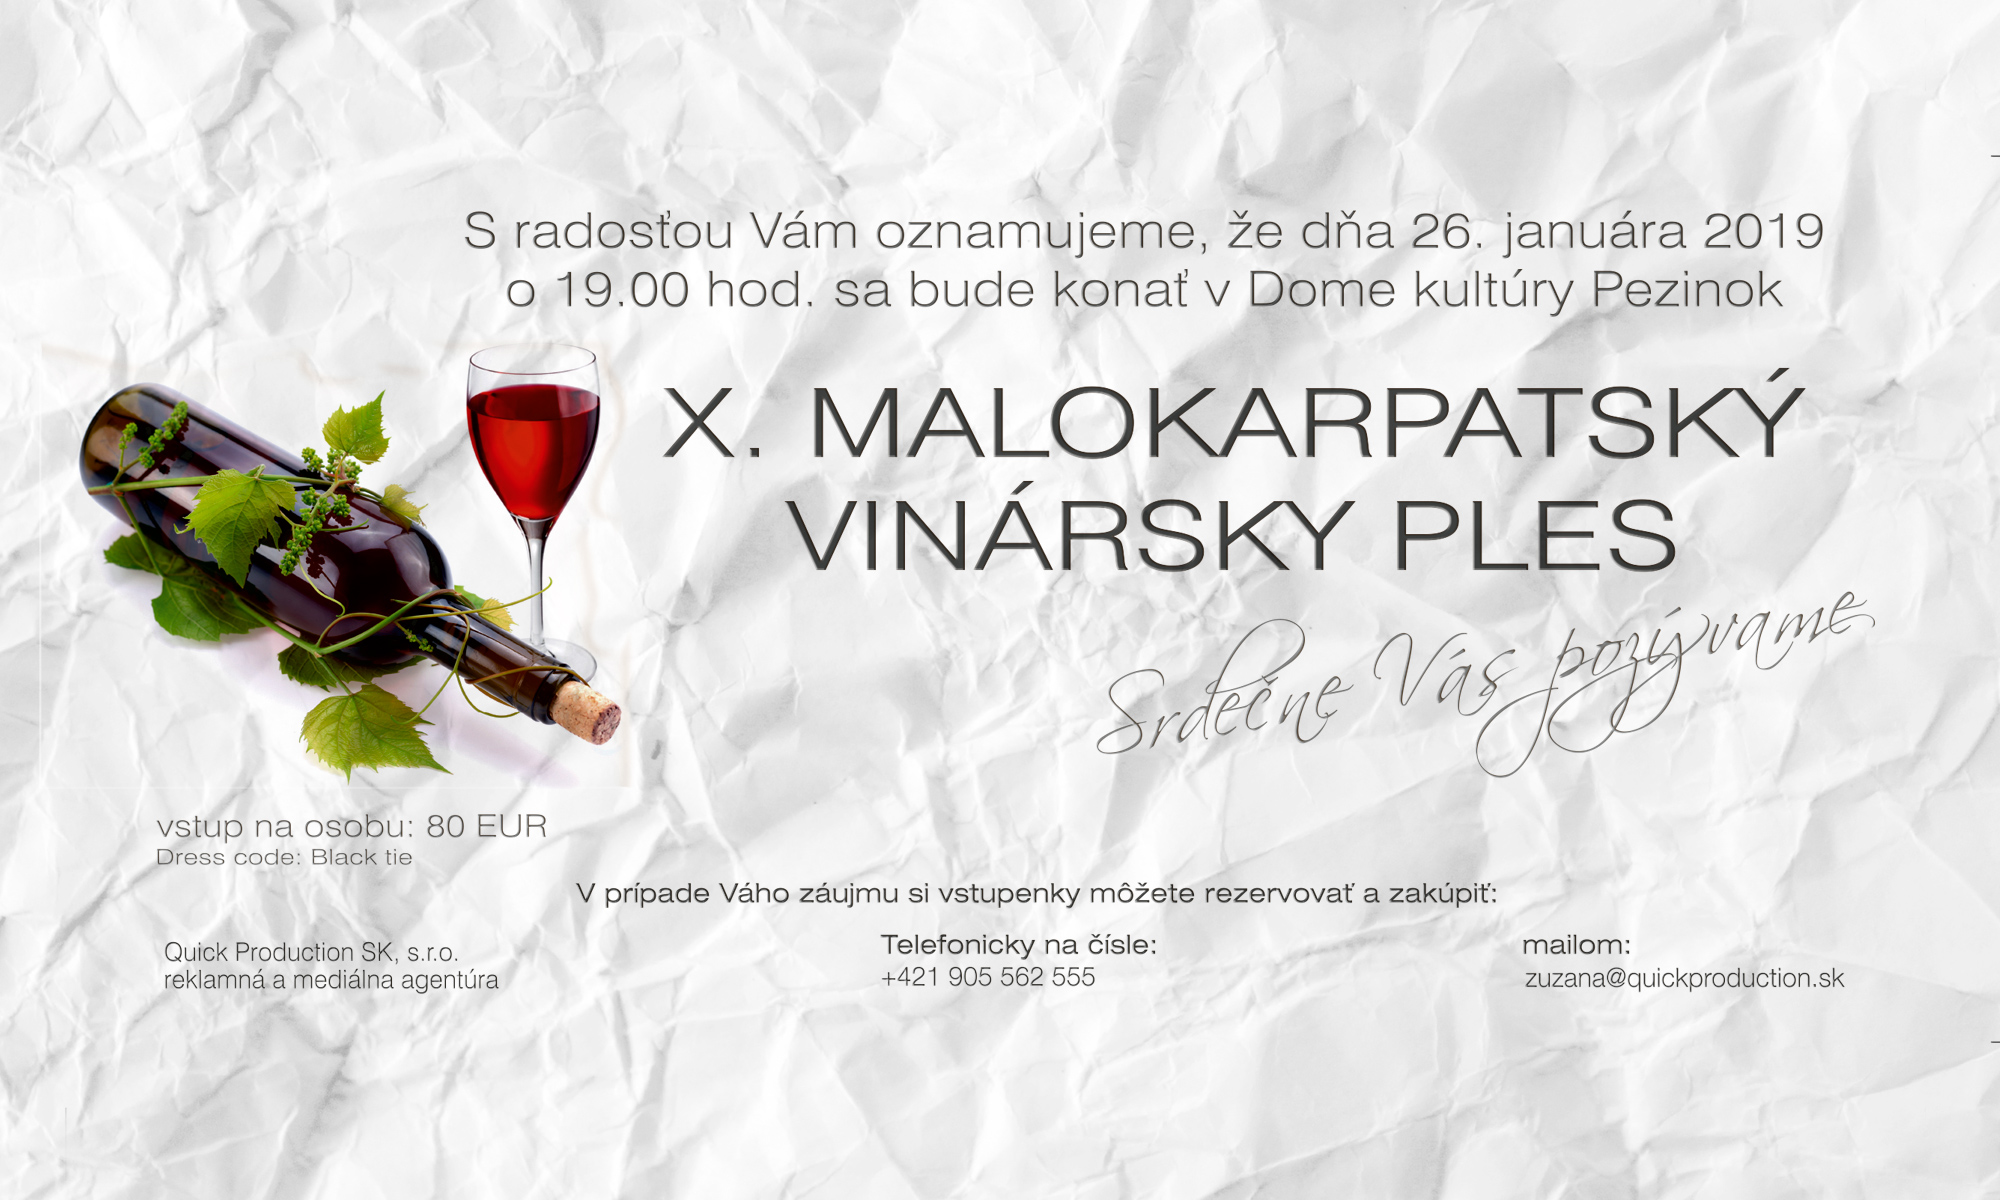 X. Malokarpatsk vinrsky ples 2019 Pezinok